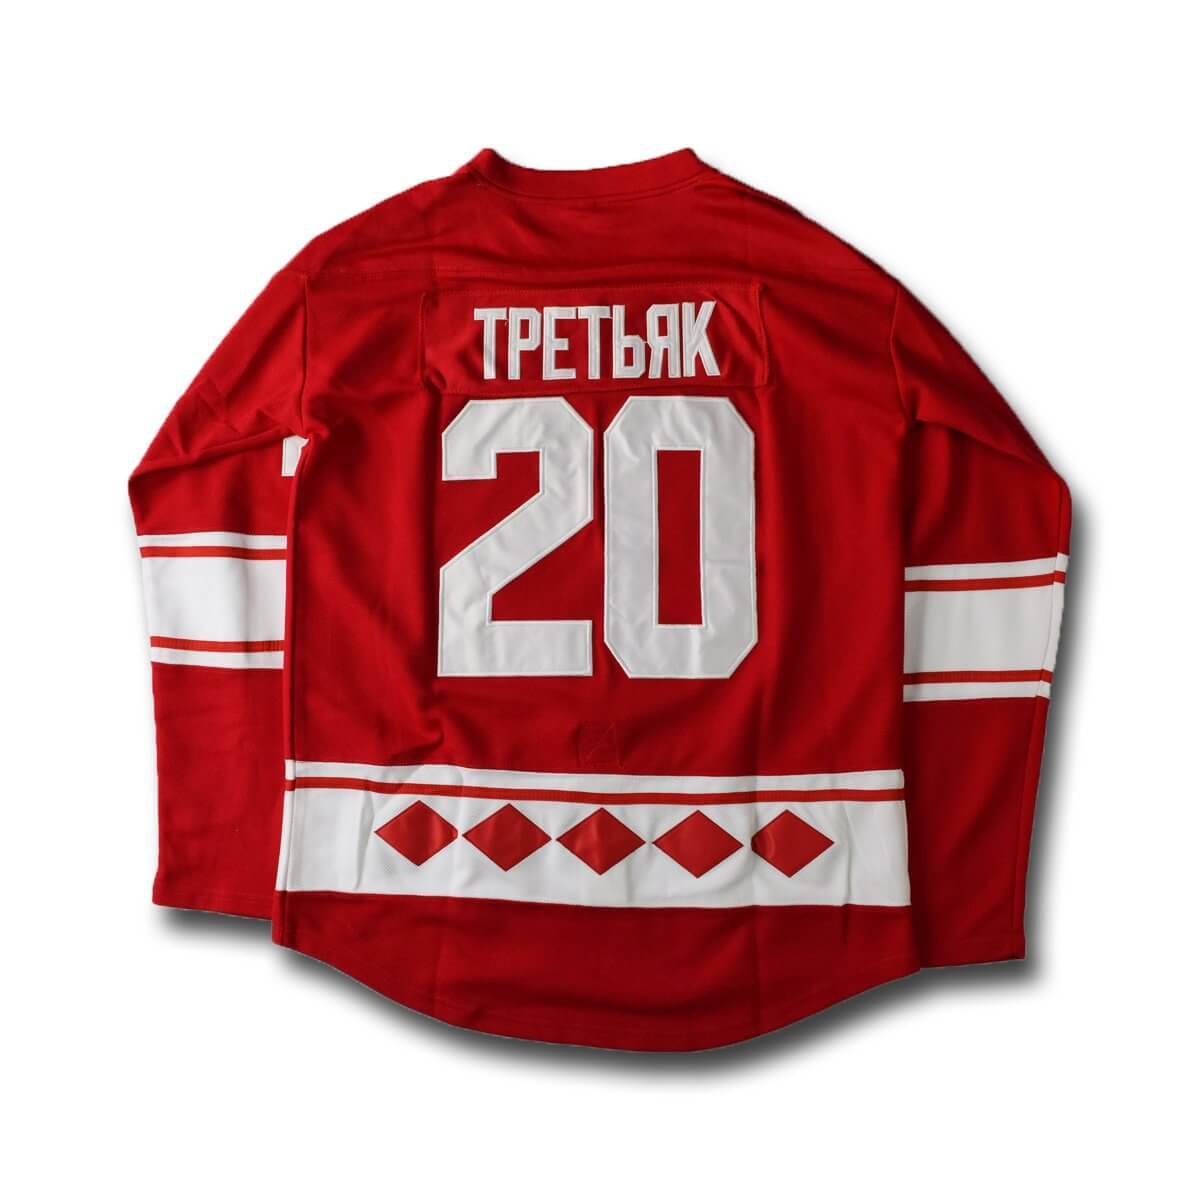 BG ice hockey jerseys CCCP 20 TPETbRK jersey Embroidery sewing